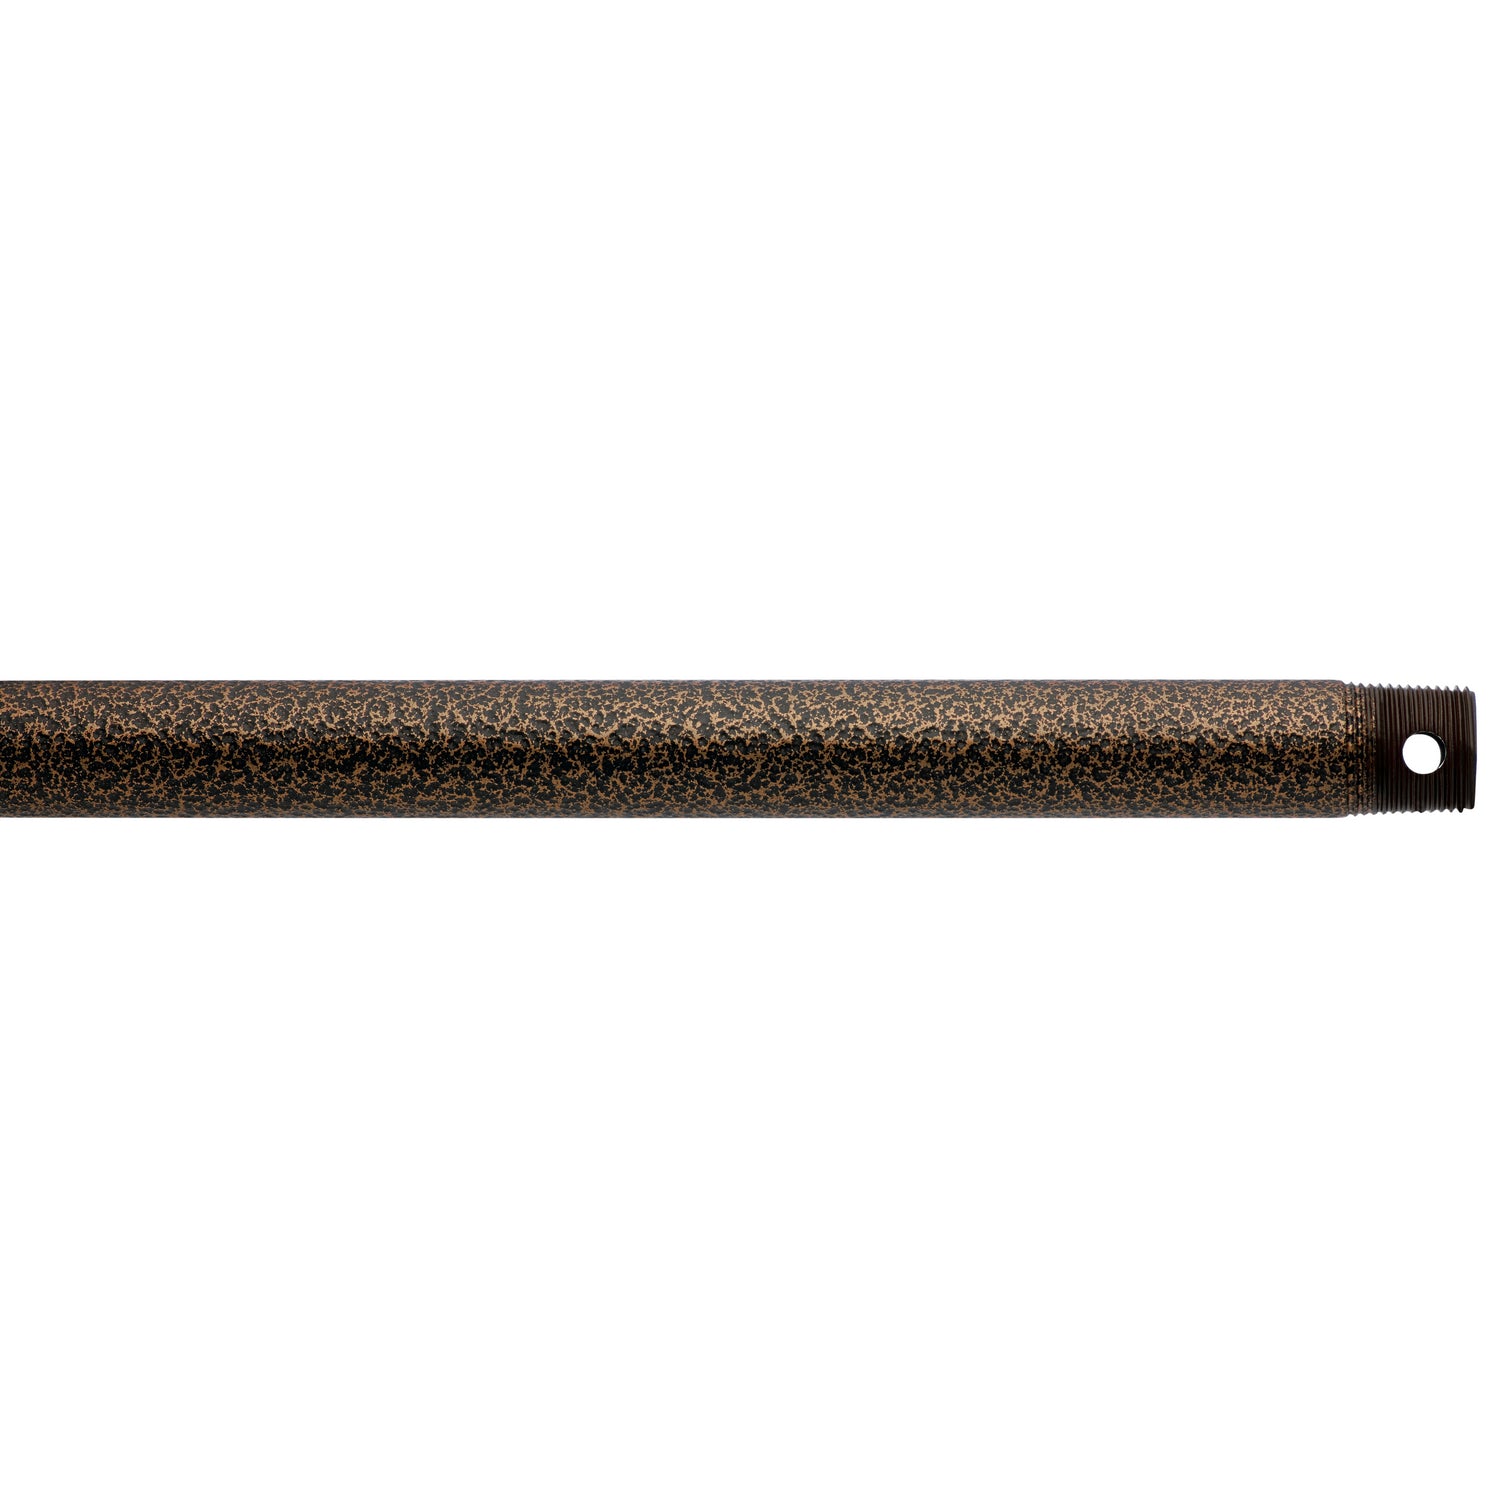 Kichler Canada - Fan Down Rod 36 Inch - Accessory - Weathered Copper Powder Coat- Union Lighting Luminaires Decor